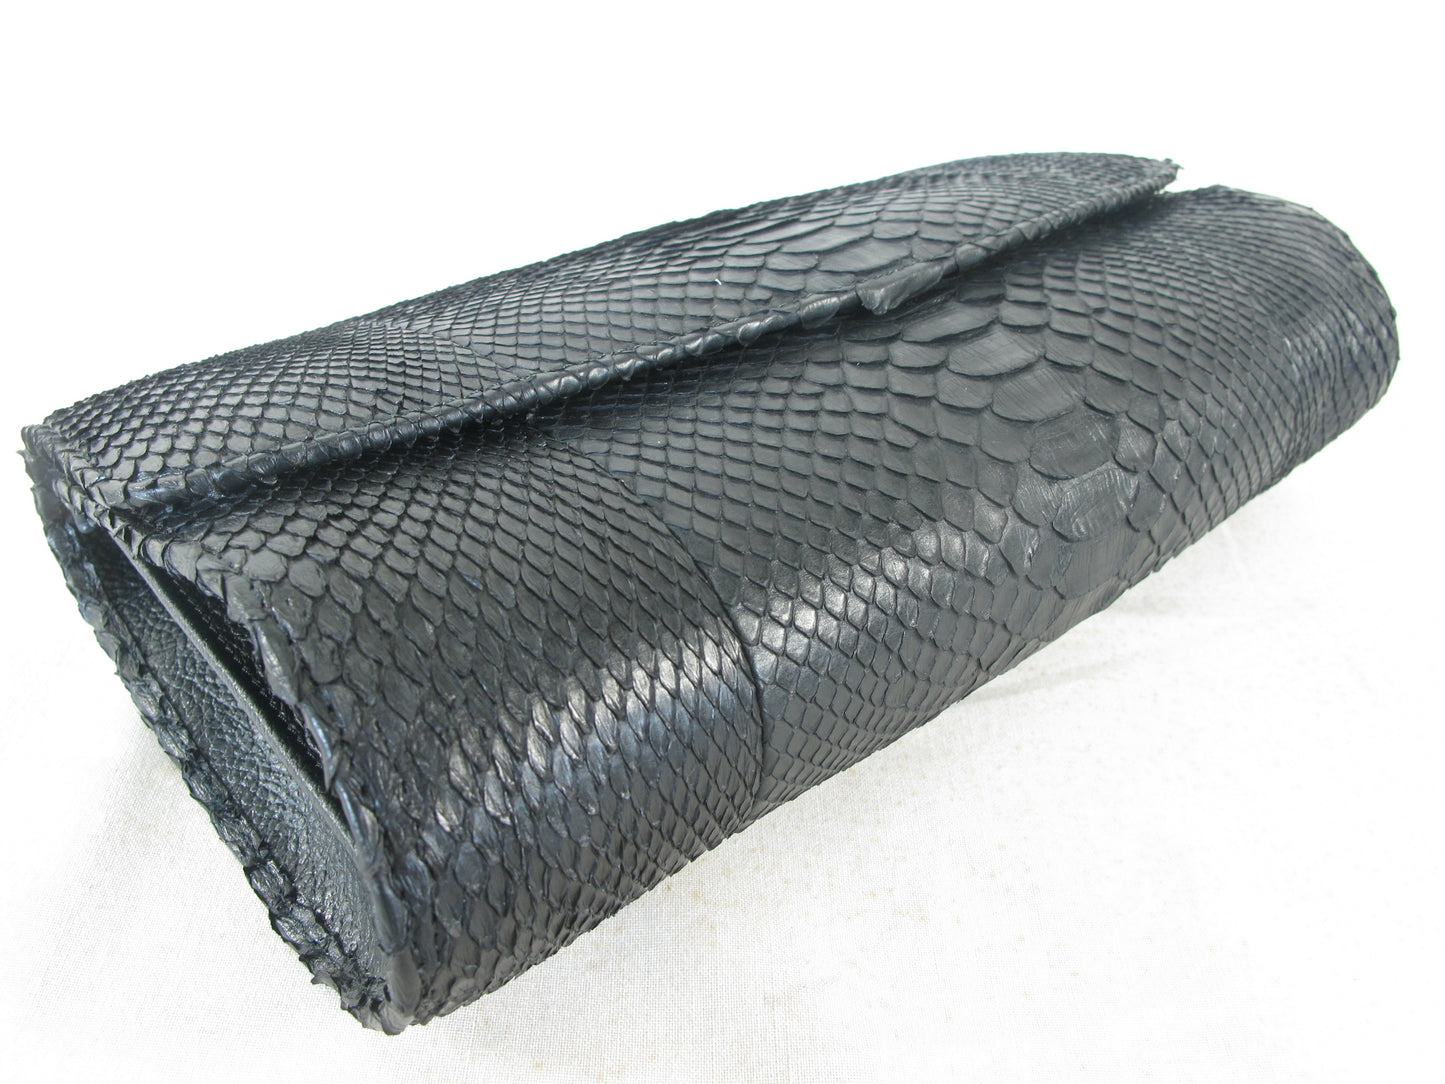 PELGIO Genuine Python Skin Leather Women's Messenger Bag Crossbody Purse